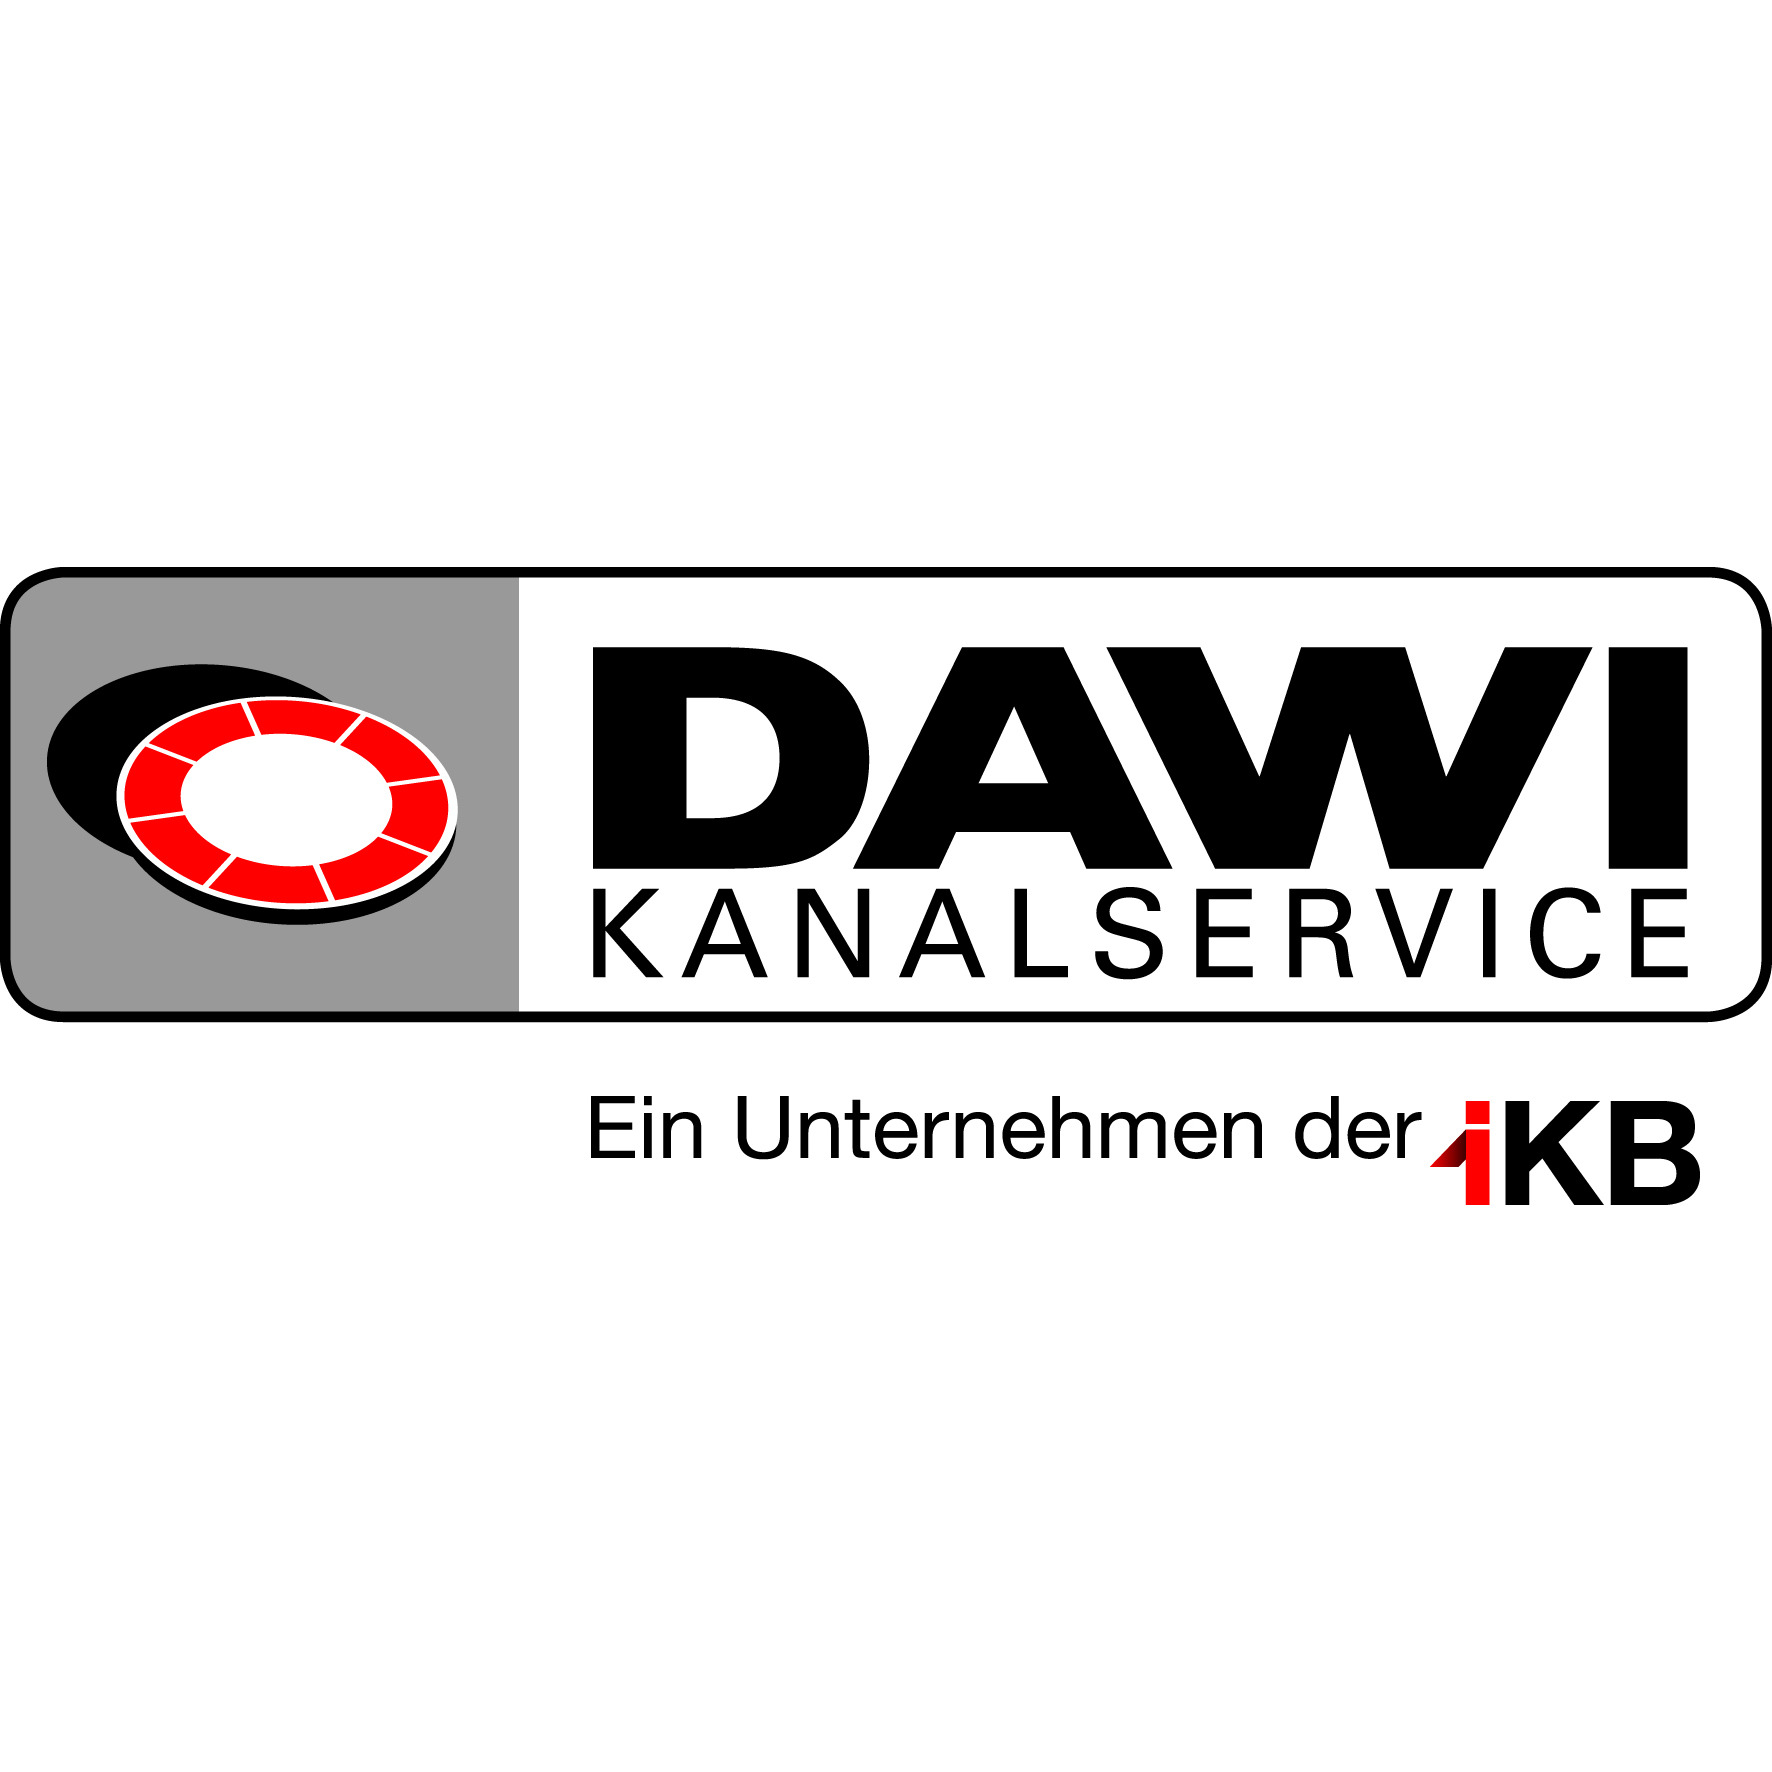 DAWI Kanalservice GmbH in 6020 Innsbruck Logo